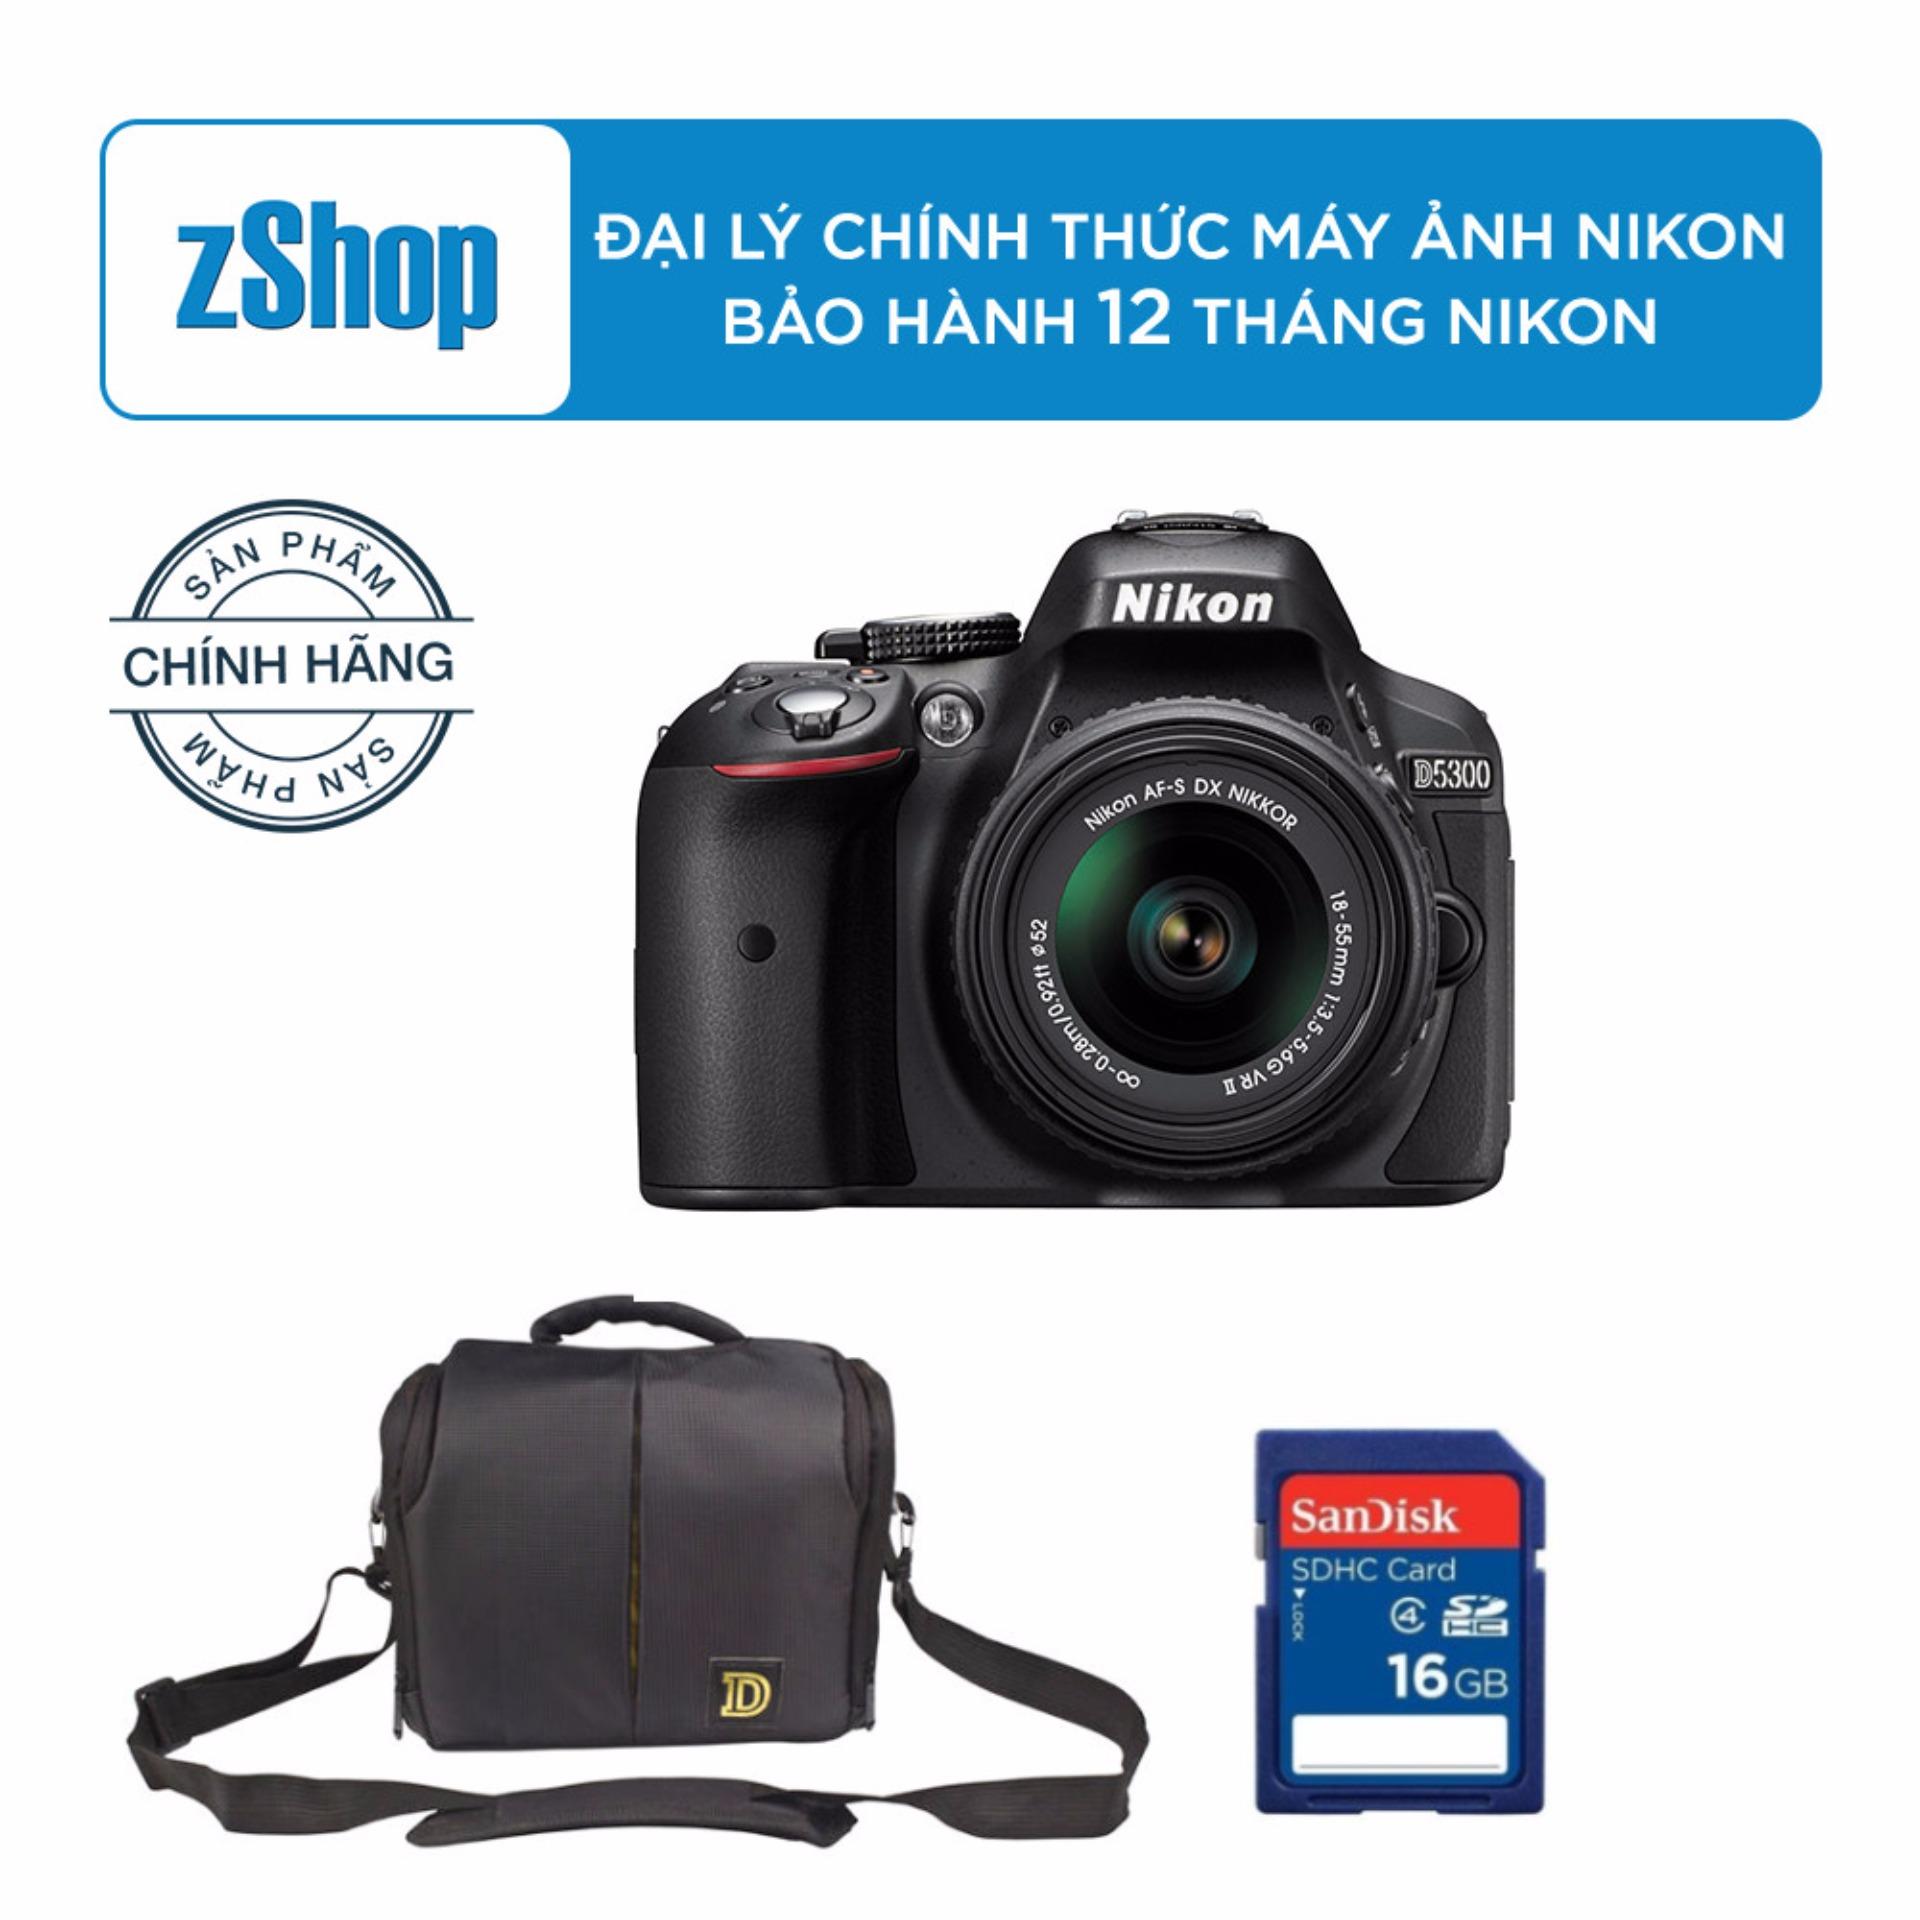 Nikon D5300 + Kit AF-S 18-55mm f/3.5-5.6G VR + Tặng túi Nikon + Thẻ nhớ SD Sandisk 16GB